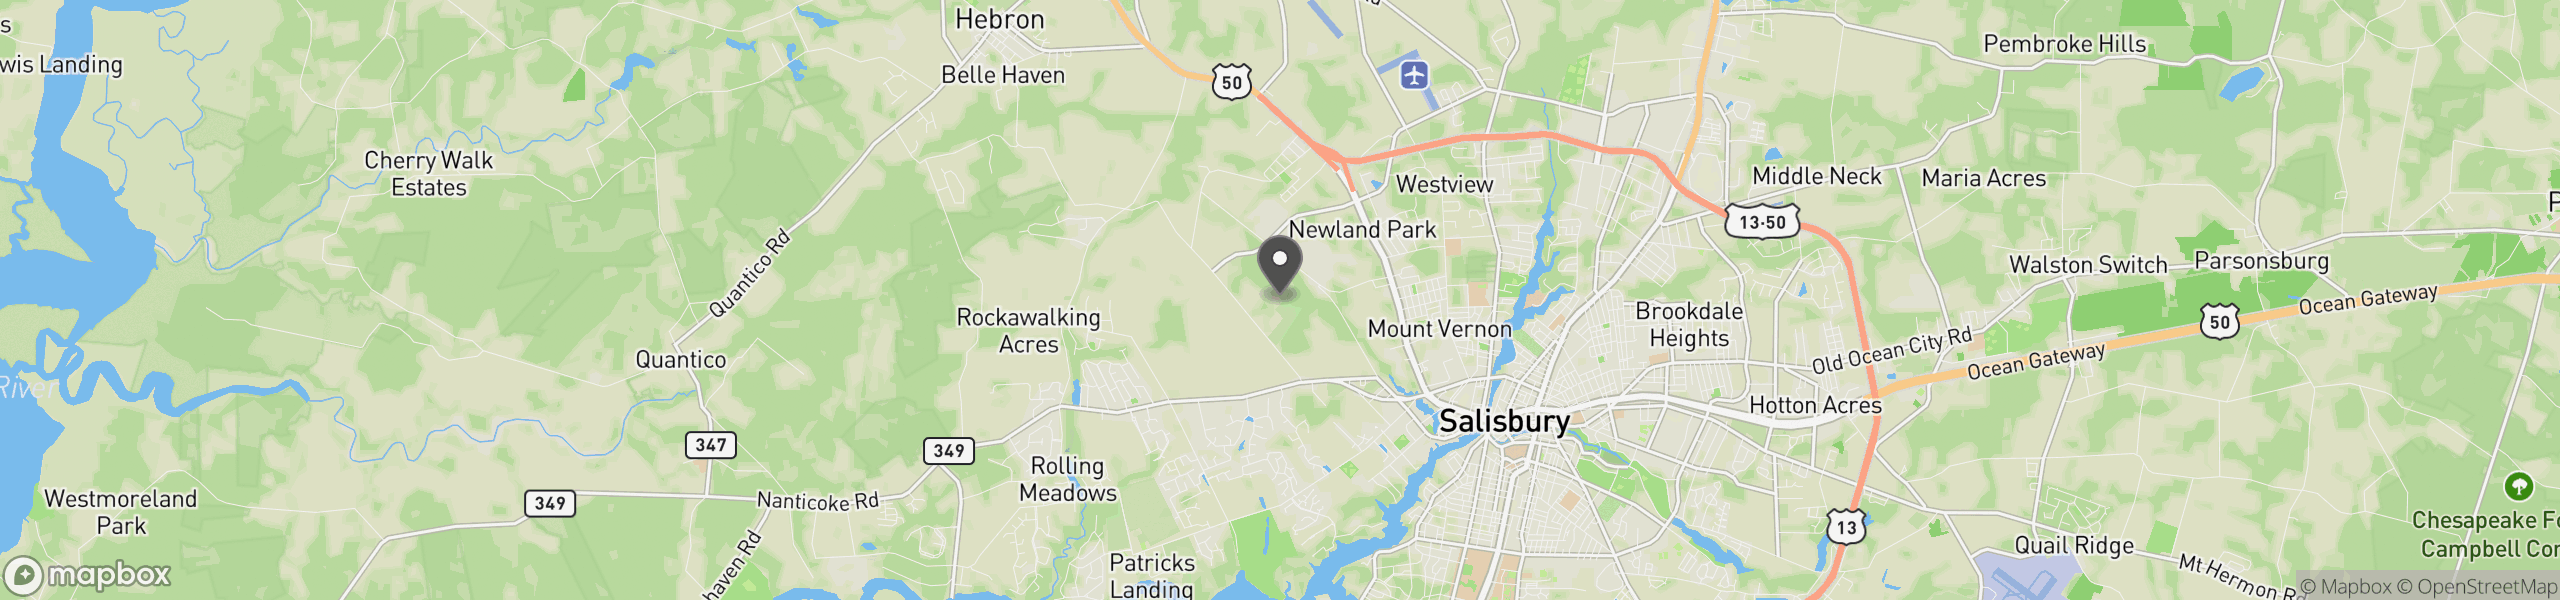 Salisbury, MD 21801